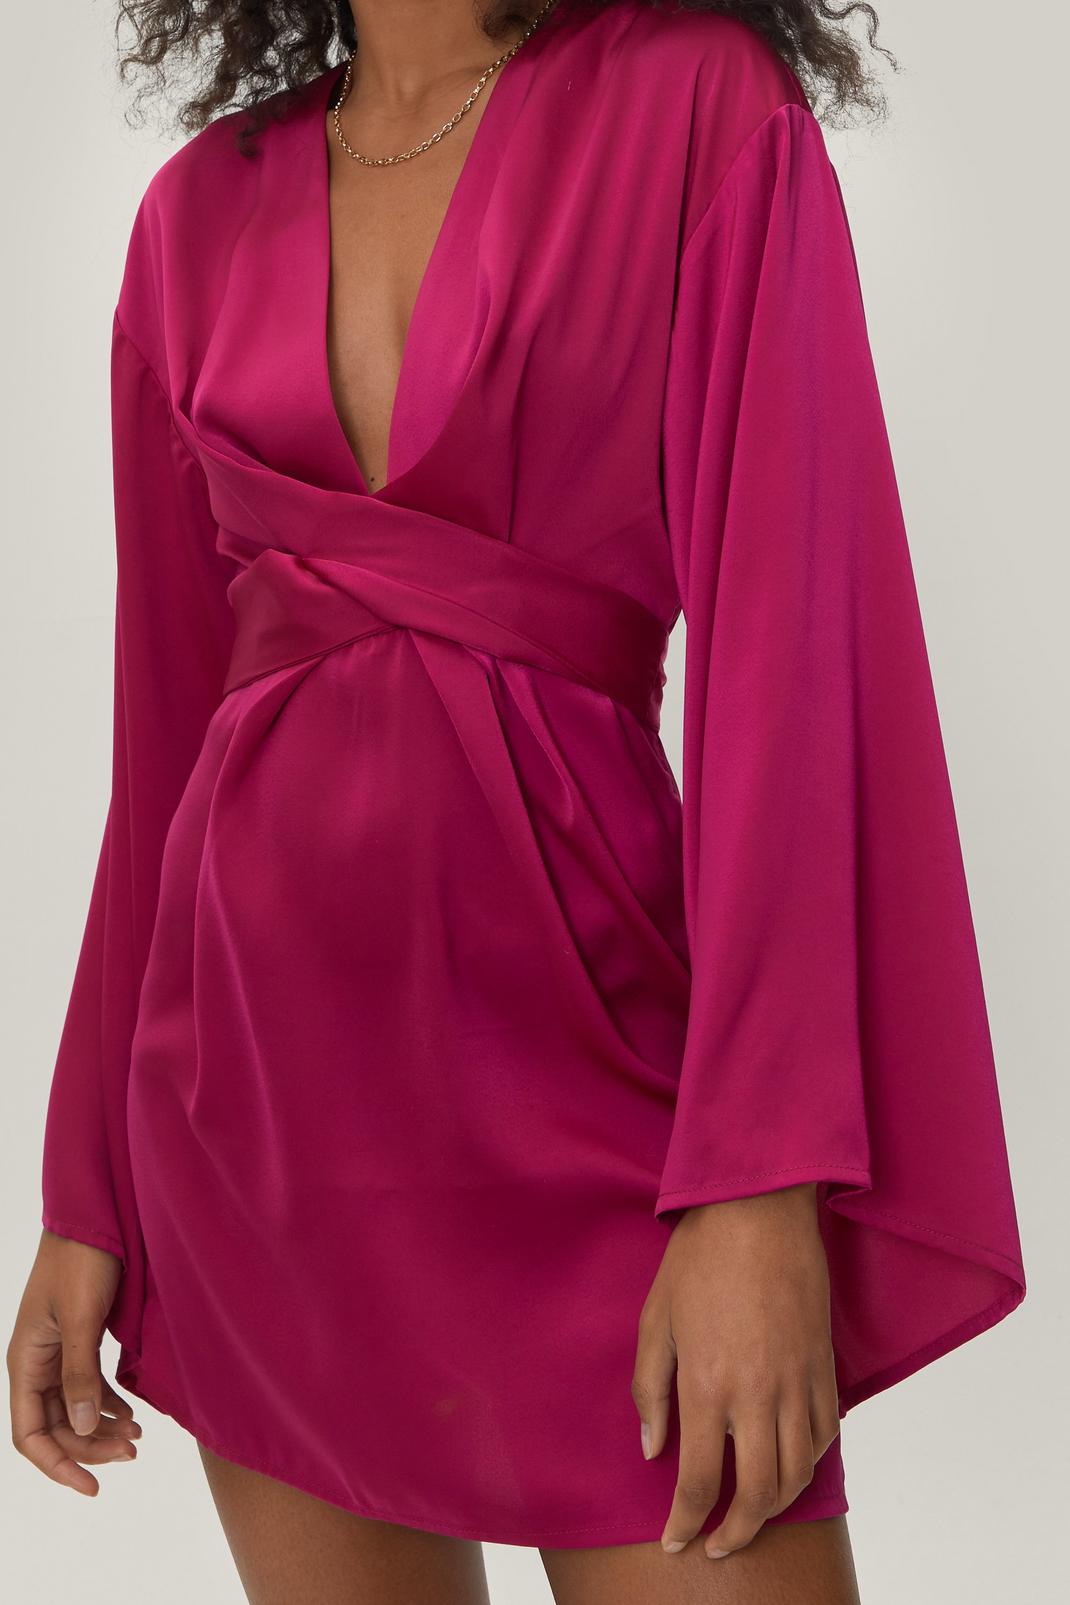 Petite - Robe courte satinée à manches kimono , Hot pink image number 1